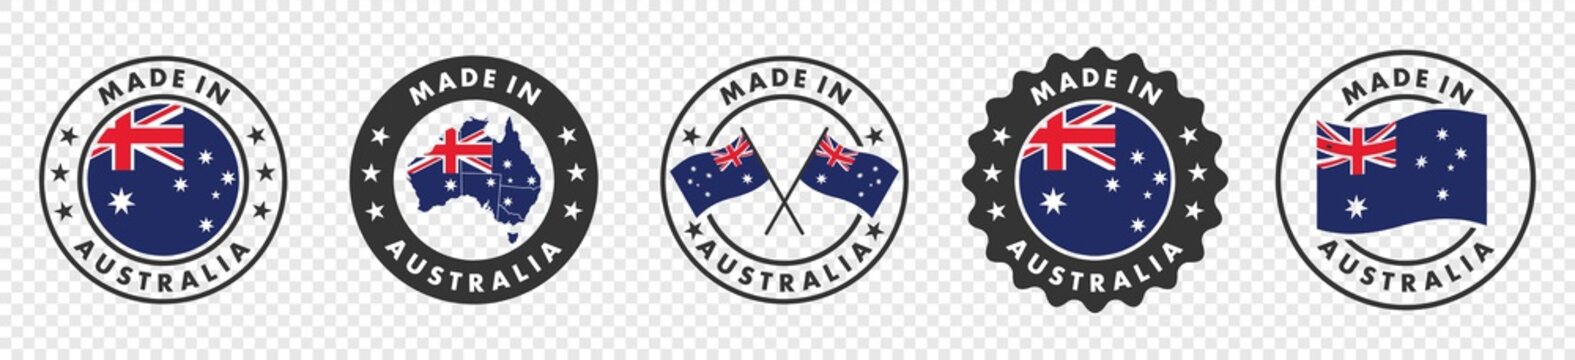 set of made in the australia labels, made in the australia logo,  australia flag , australia product emblem, Vector illustration.	